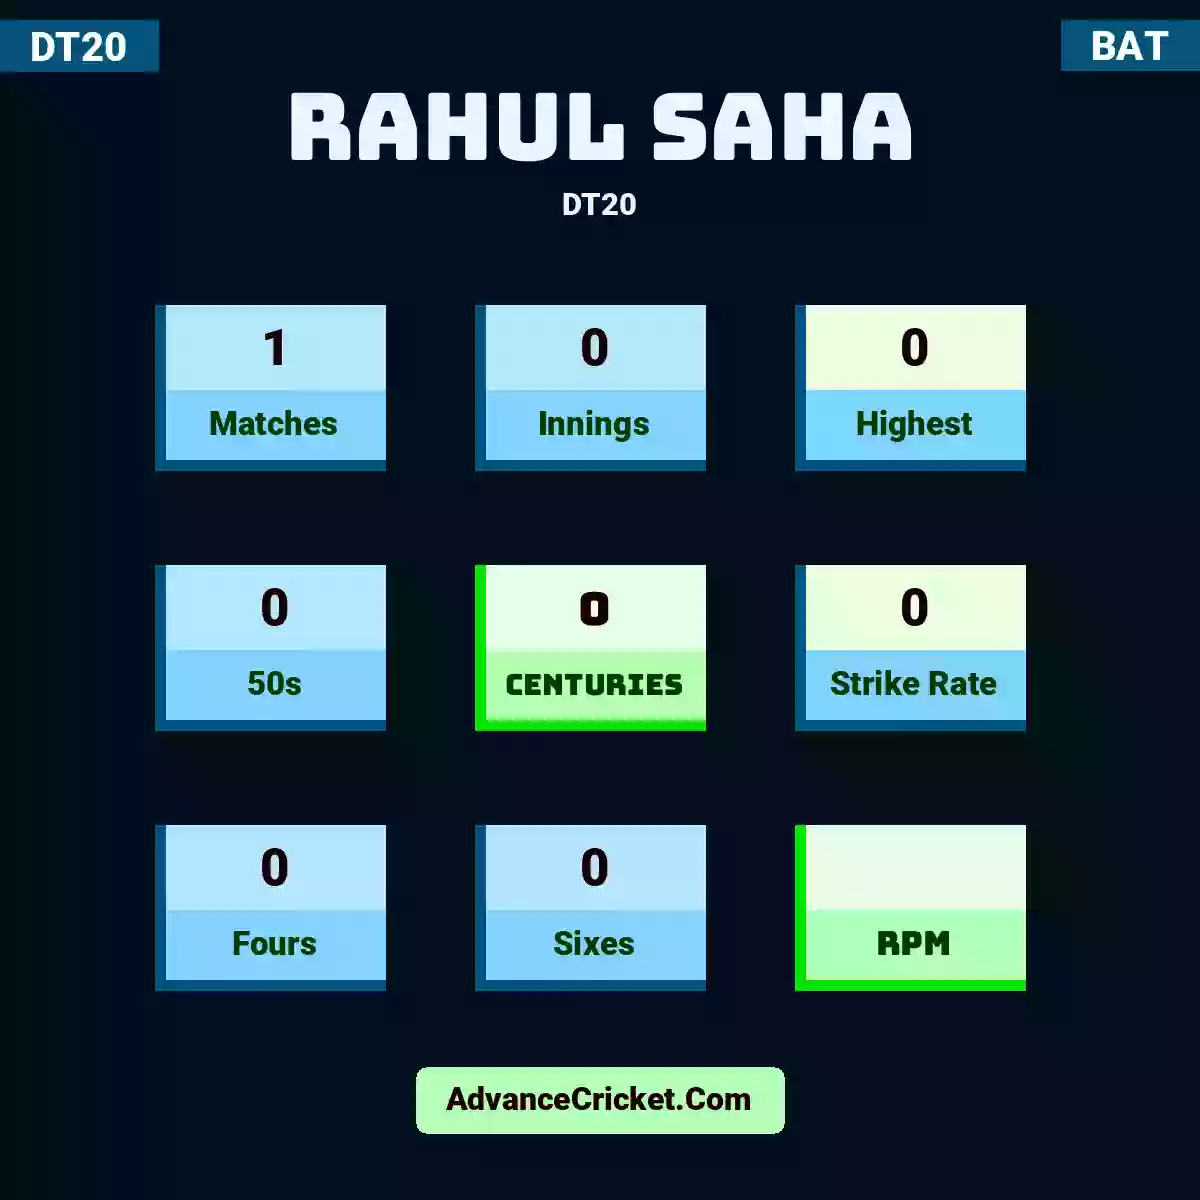 Rahul Saha DT20 , Rahul Saha played 1 matches, scored 0 runs as highest, 0 half-centuries, and 0 centuries, with a strike rate of 0. R.Saha hit 0 fours and 0 sixes.